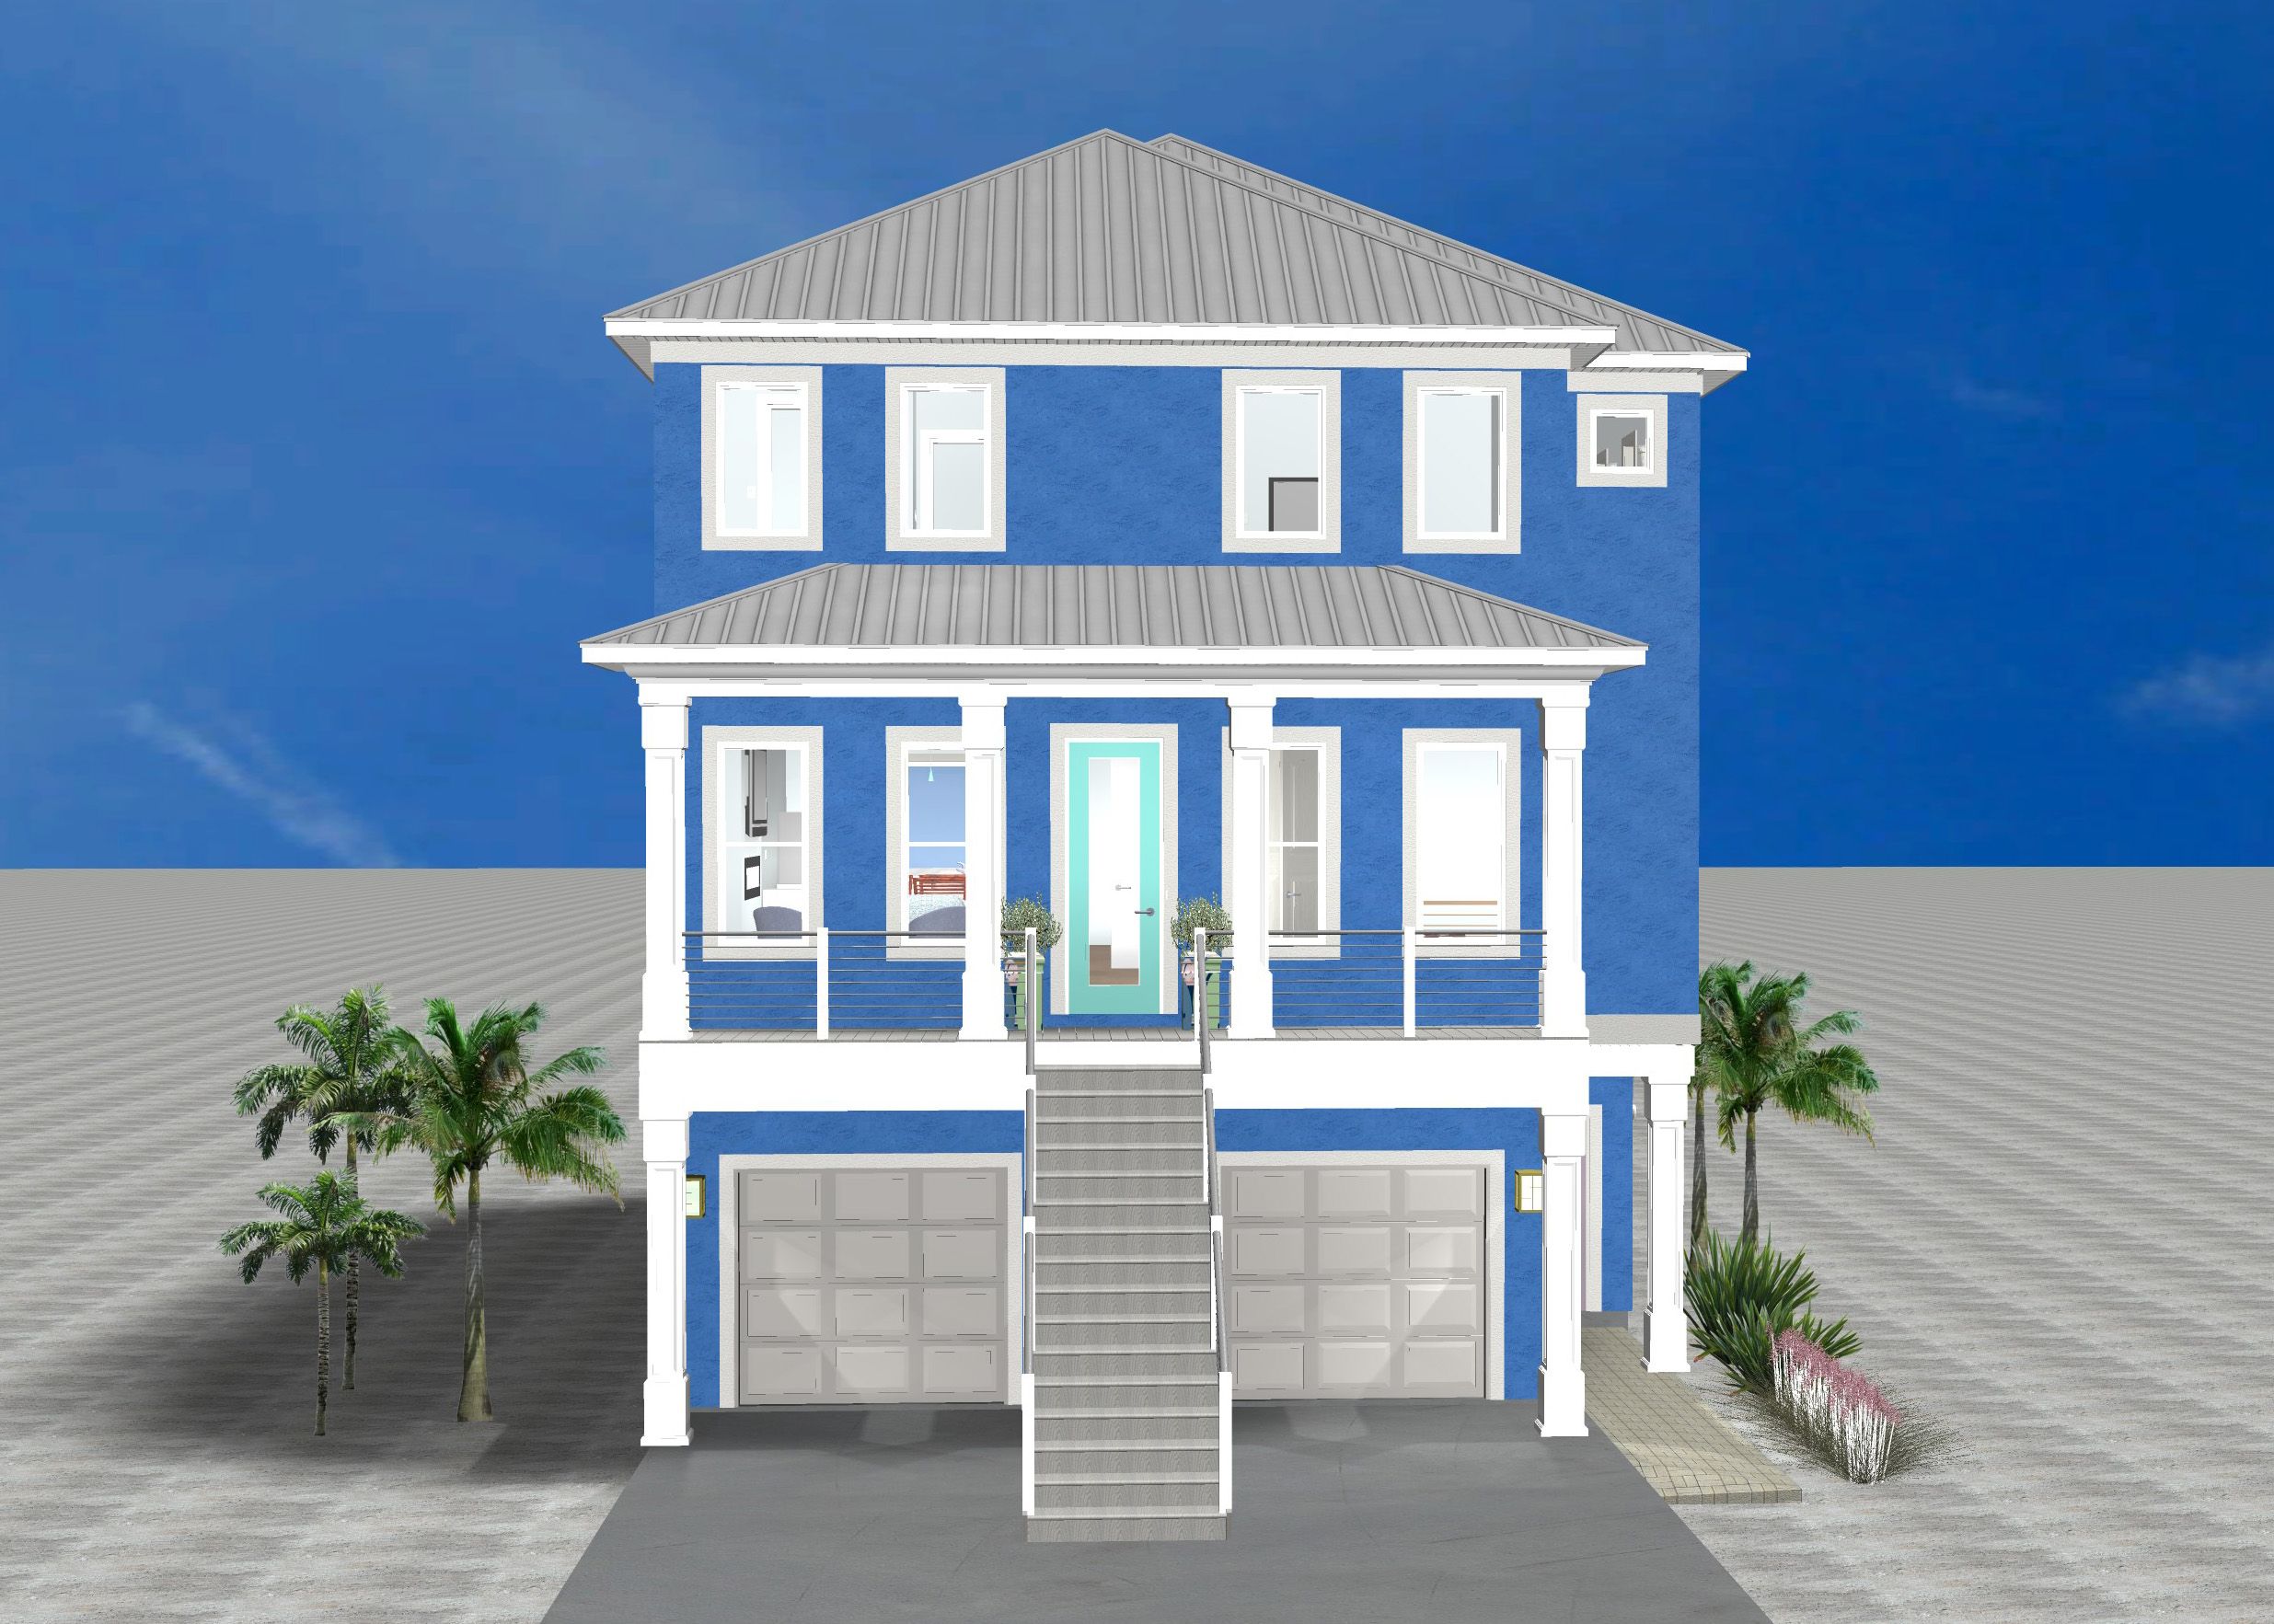 Caribbean Isles modern coastal piling home by Acorn Fine Homes